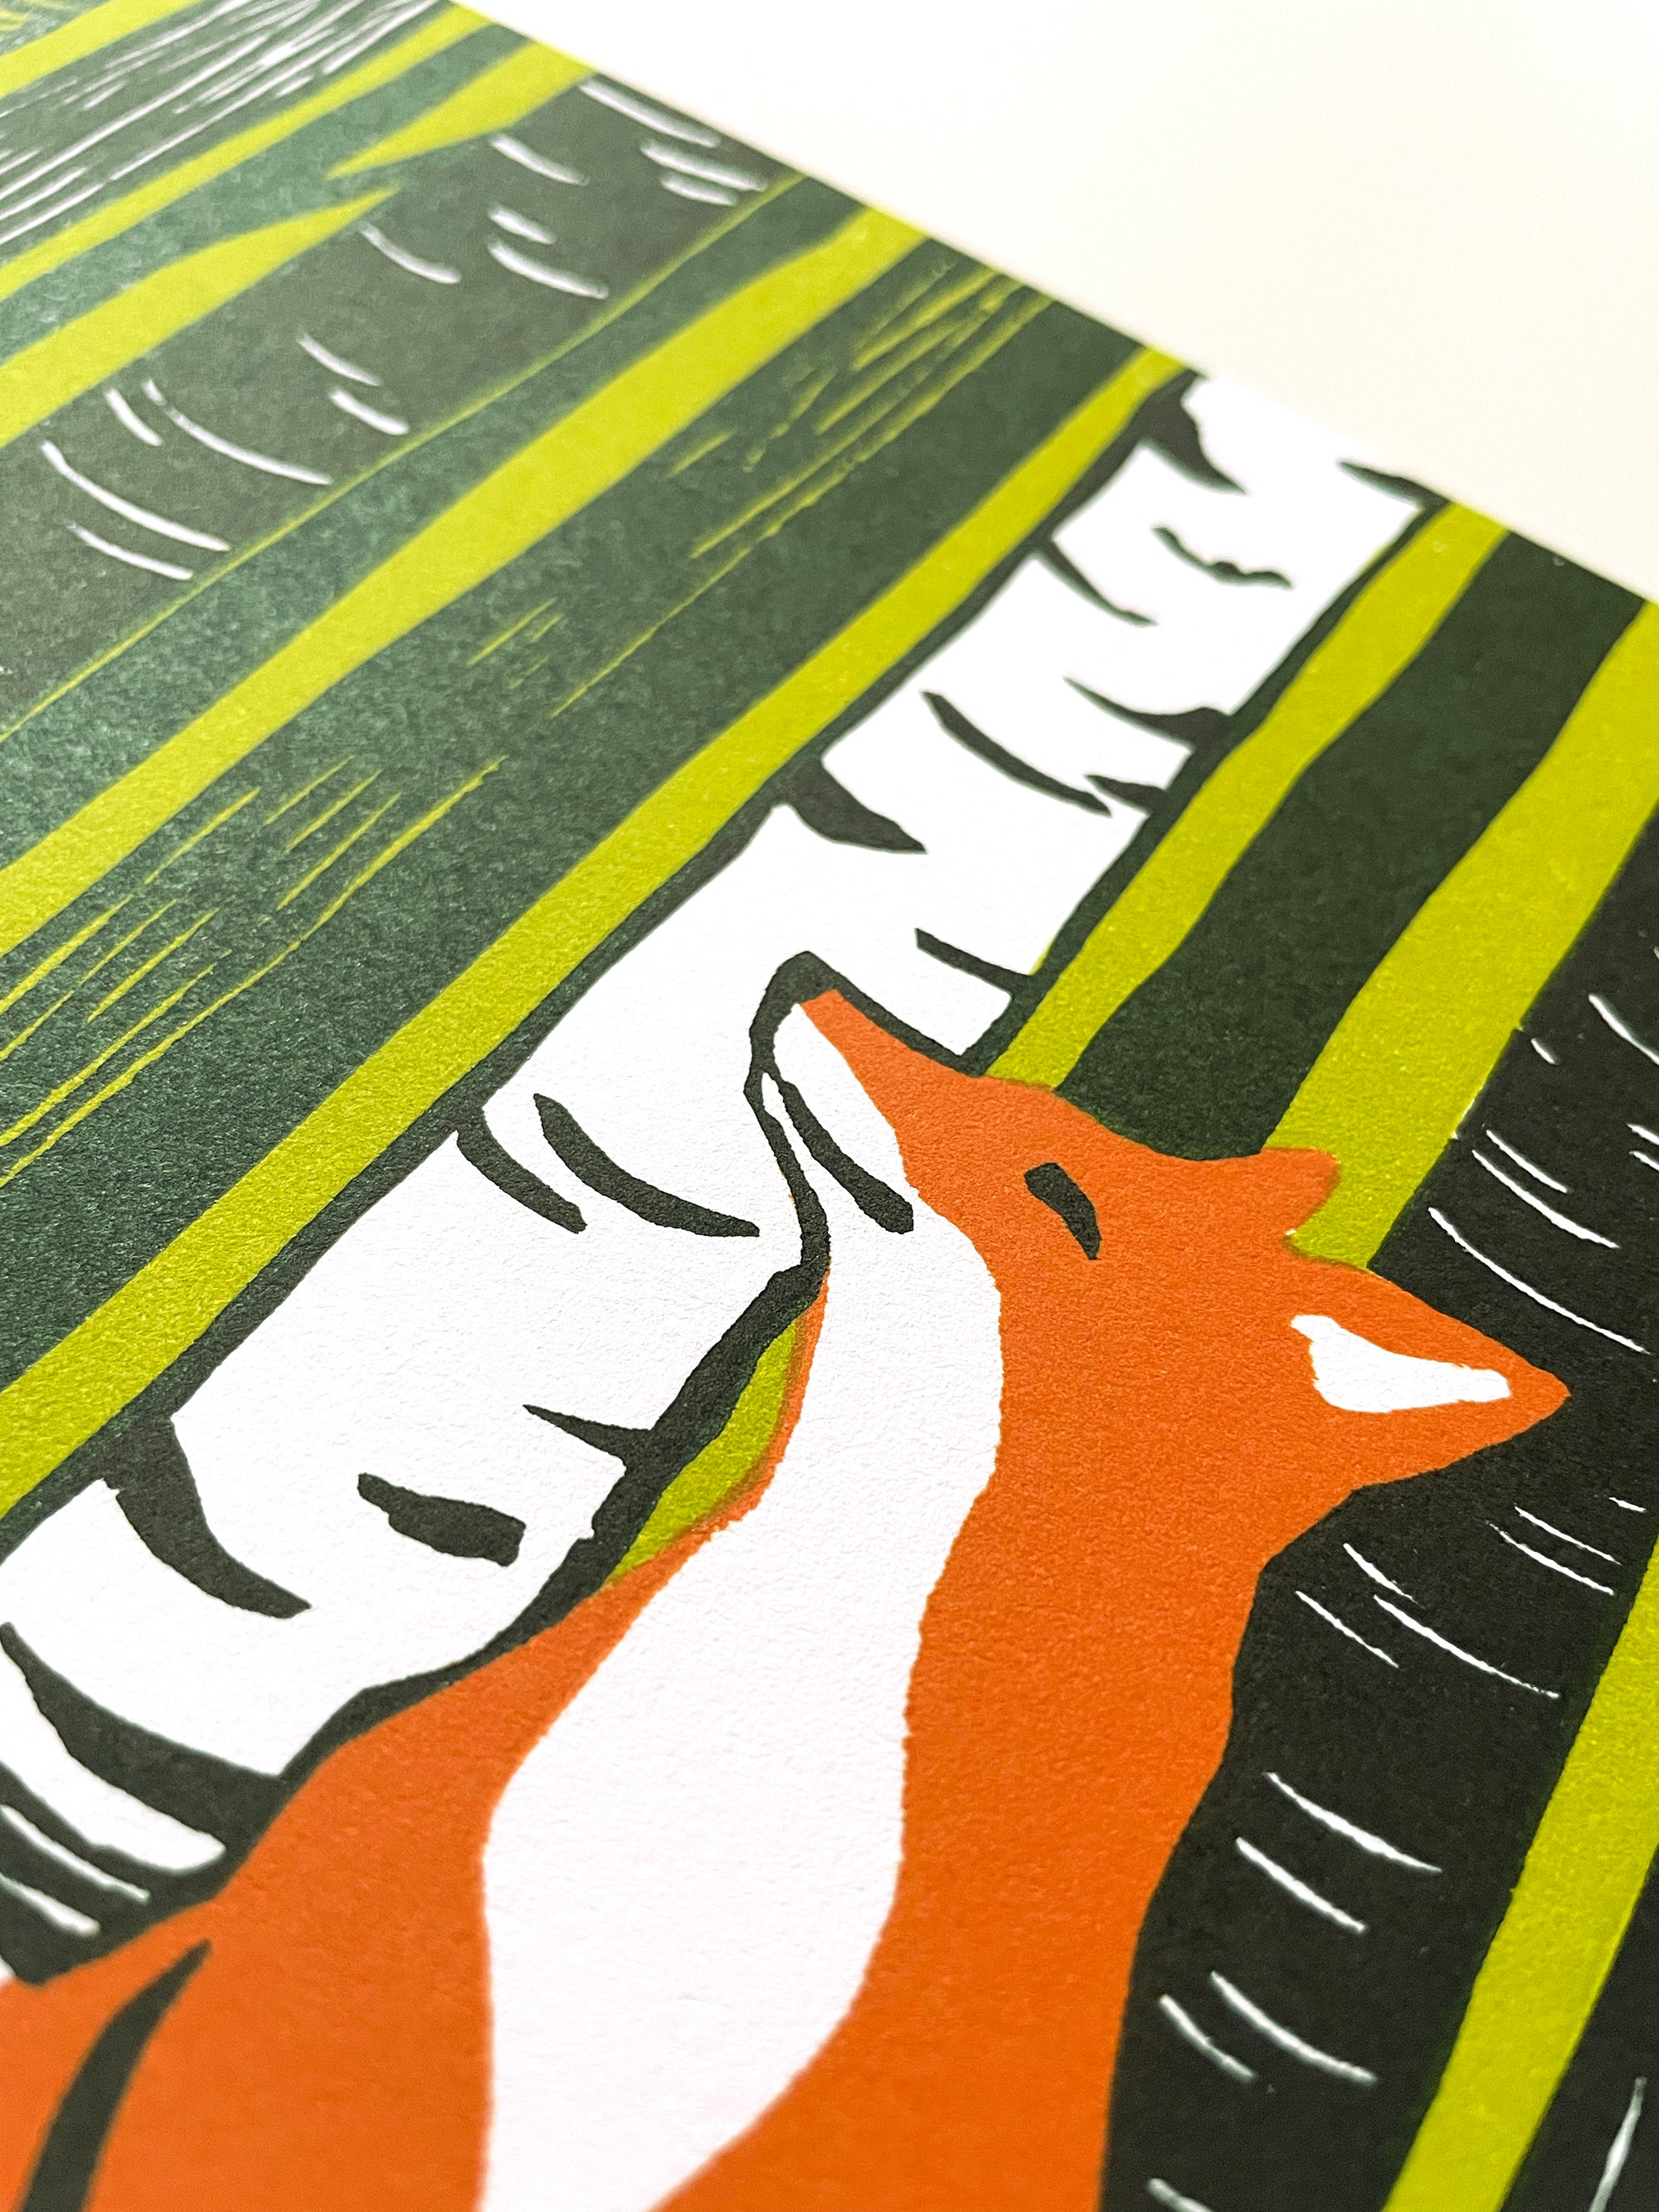 Downy Woodpecker fine art linoleum block letterpress print – Moon Rabbit  Press